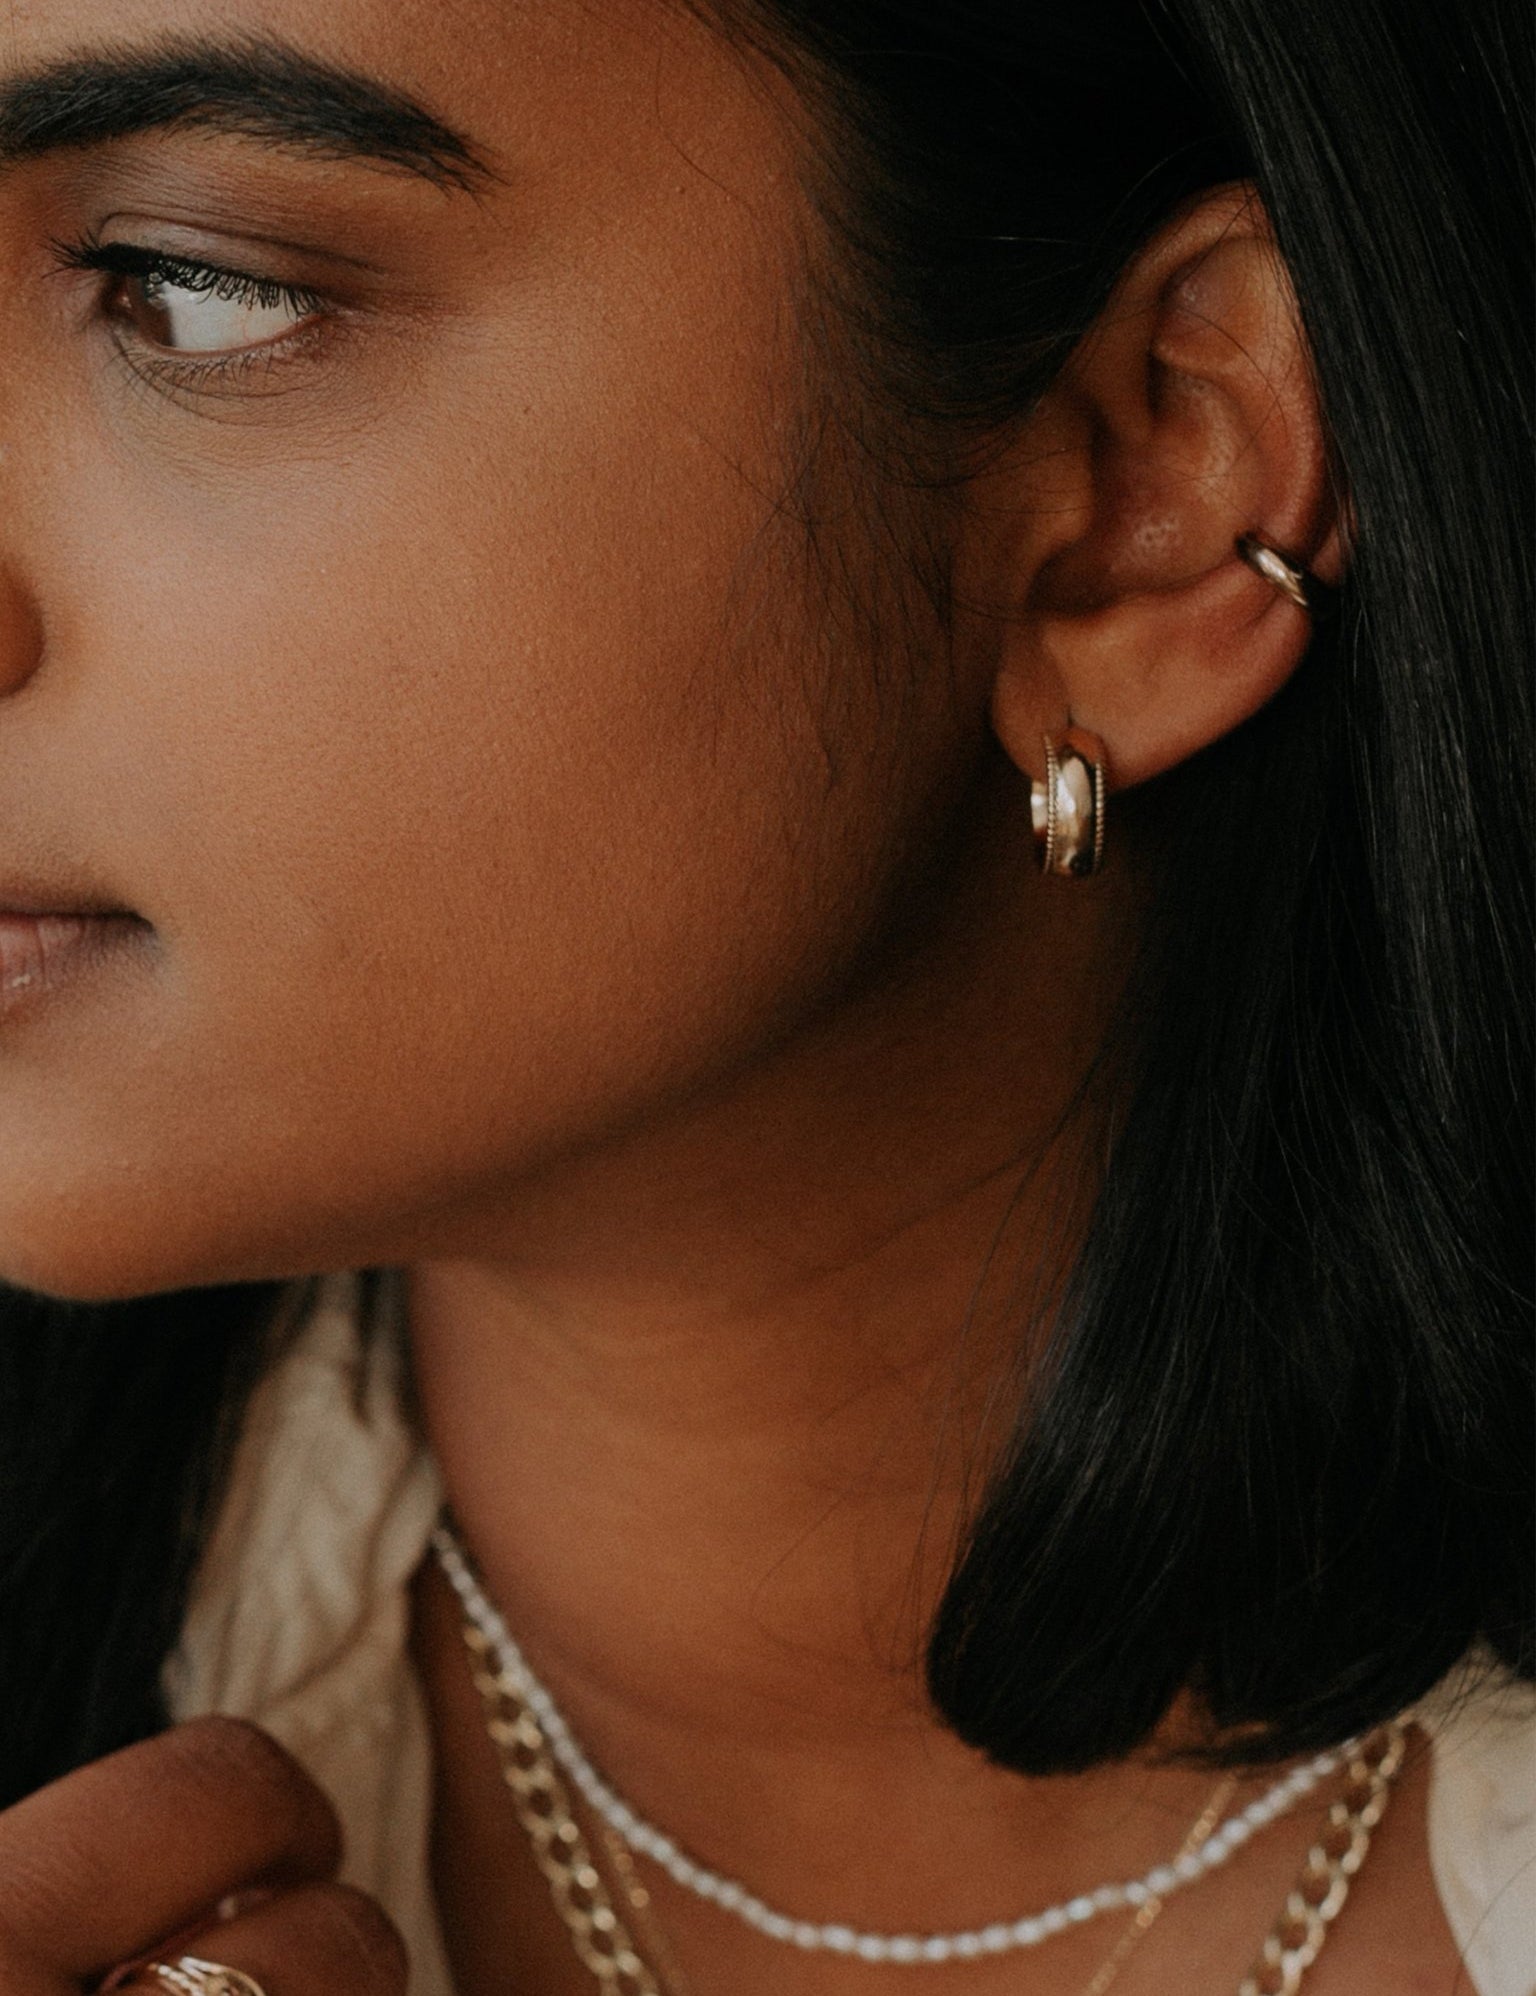 Basin ear cuff | gold fill - hart & stone jewelry